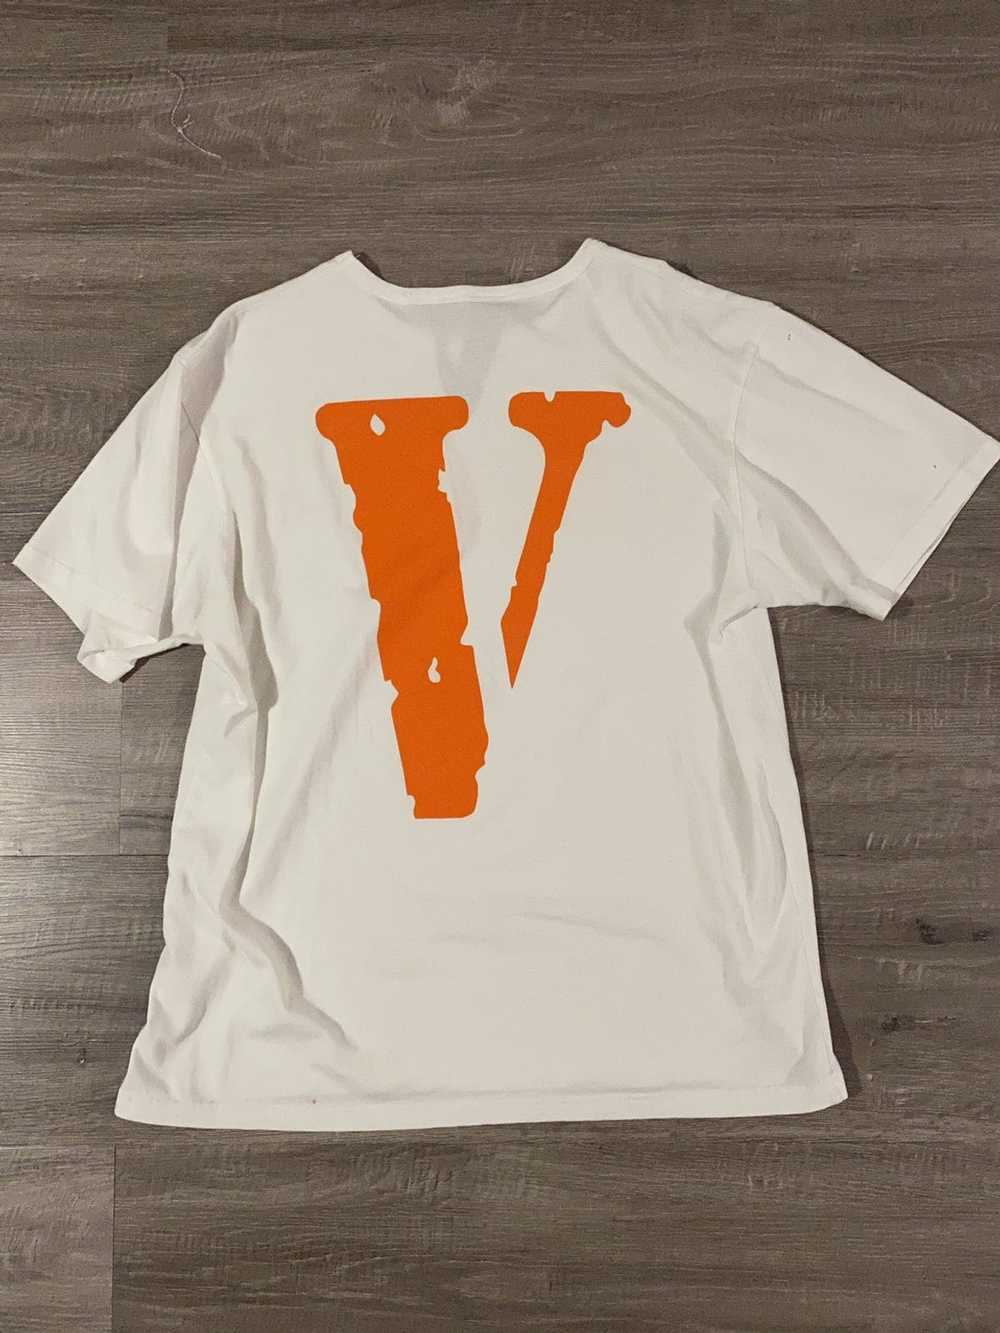 Vlone Vlone Friends White Orange T-Shirt Size XL - image 2